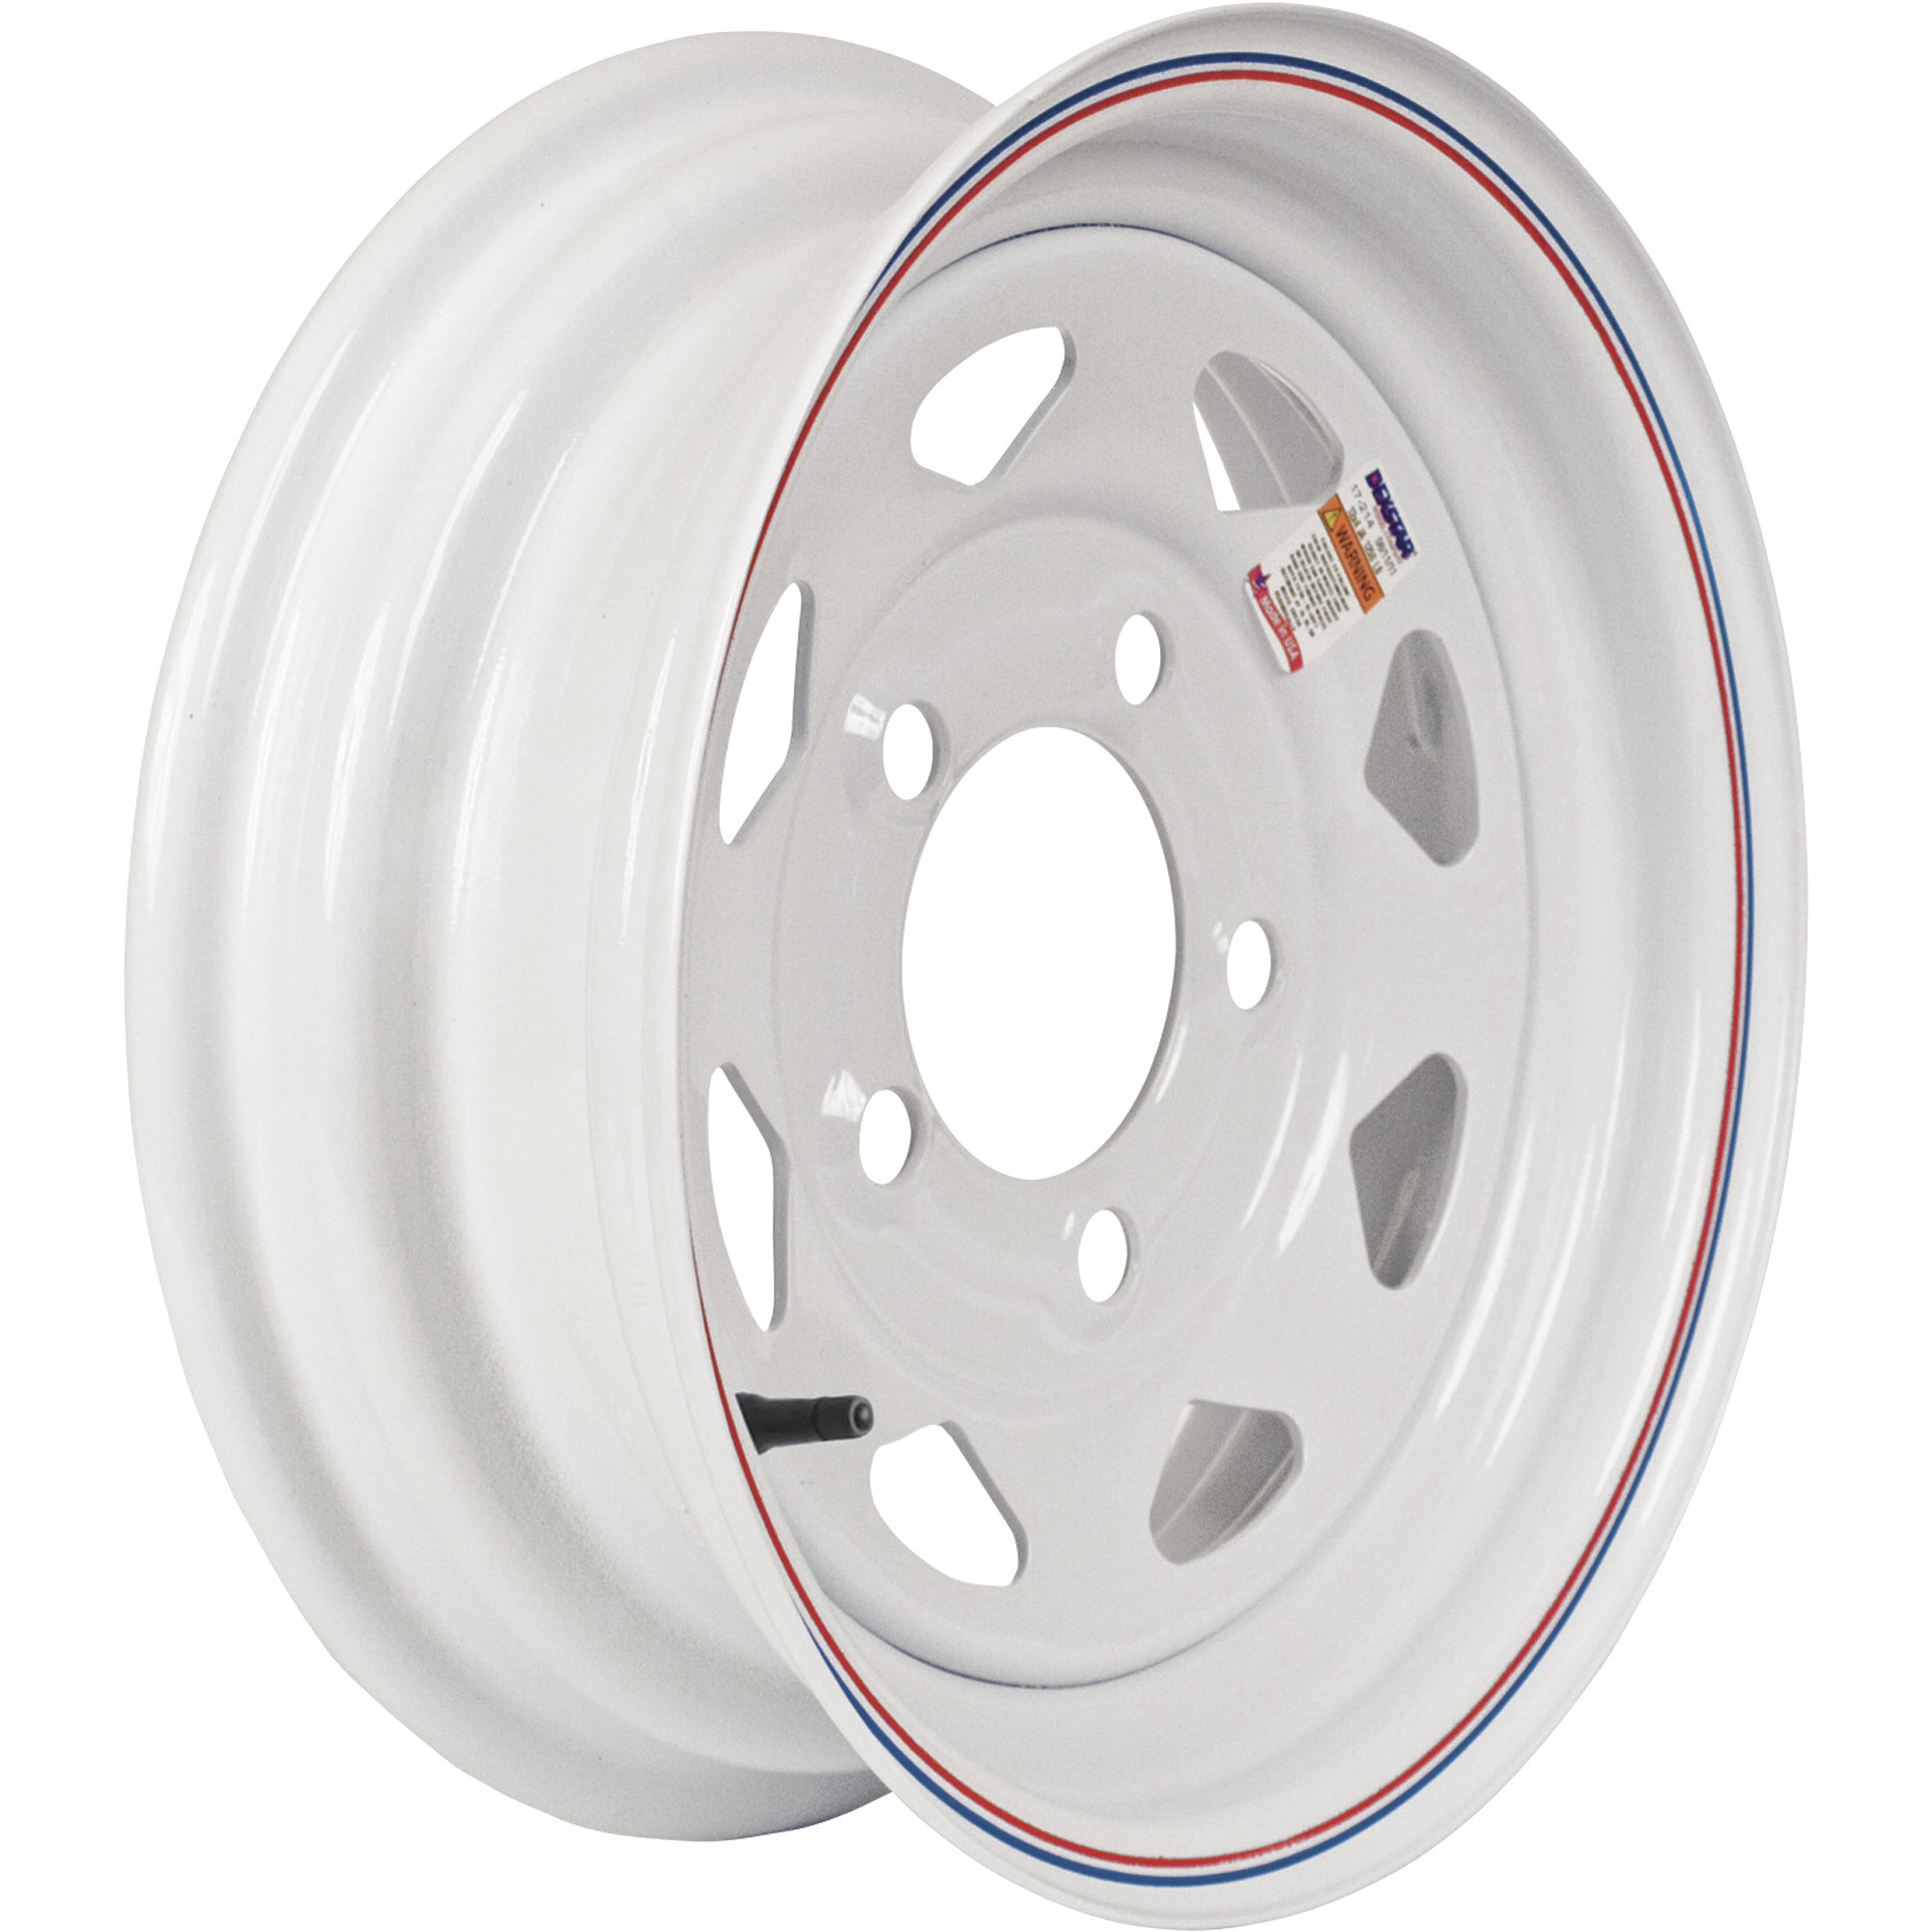 Martin Wheel 12Inch Spoked Trailer Tire Wheel â Rim Only, Fits Tire Sizes 4.80 x 12, 5.30 x 12, 5-Hole, Model R-125S-VN